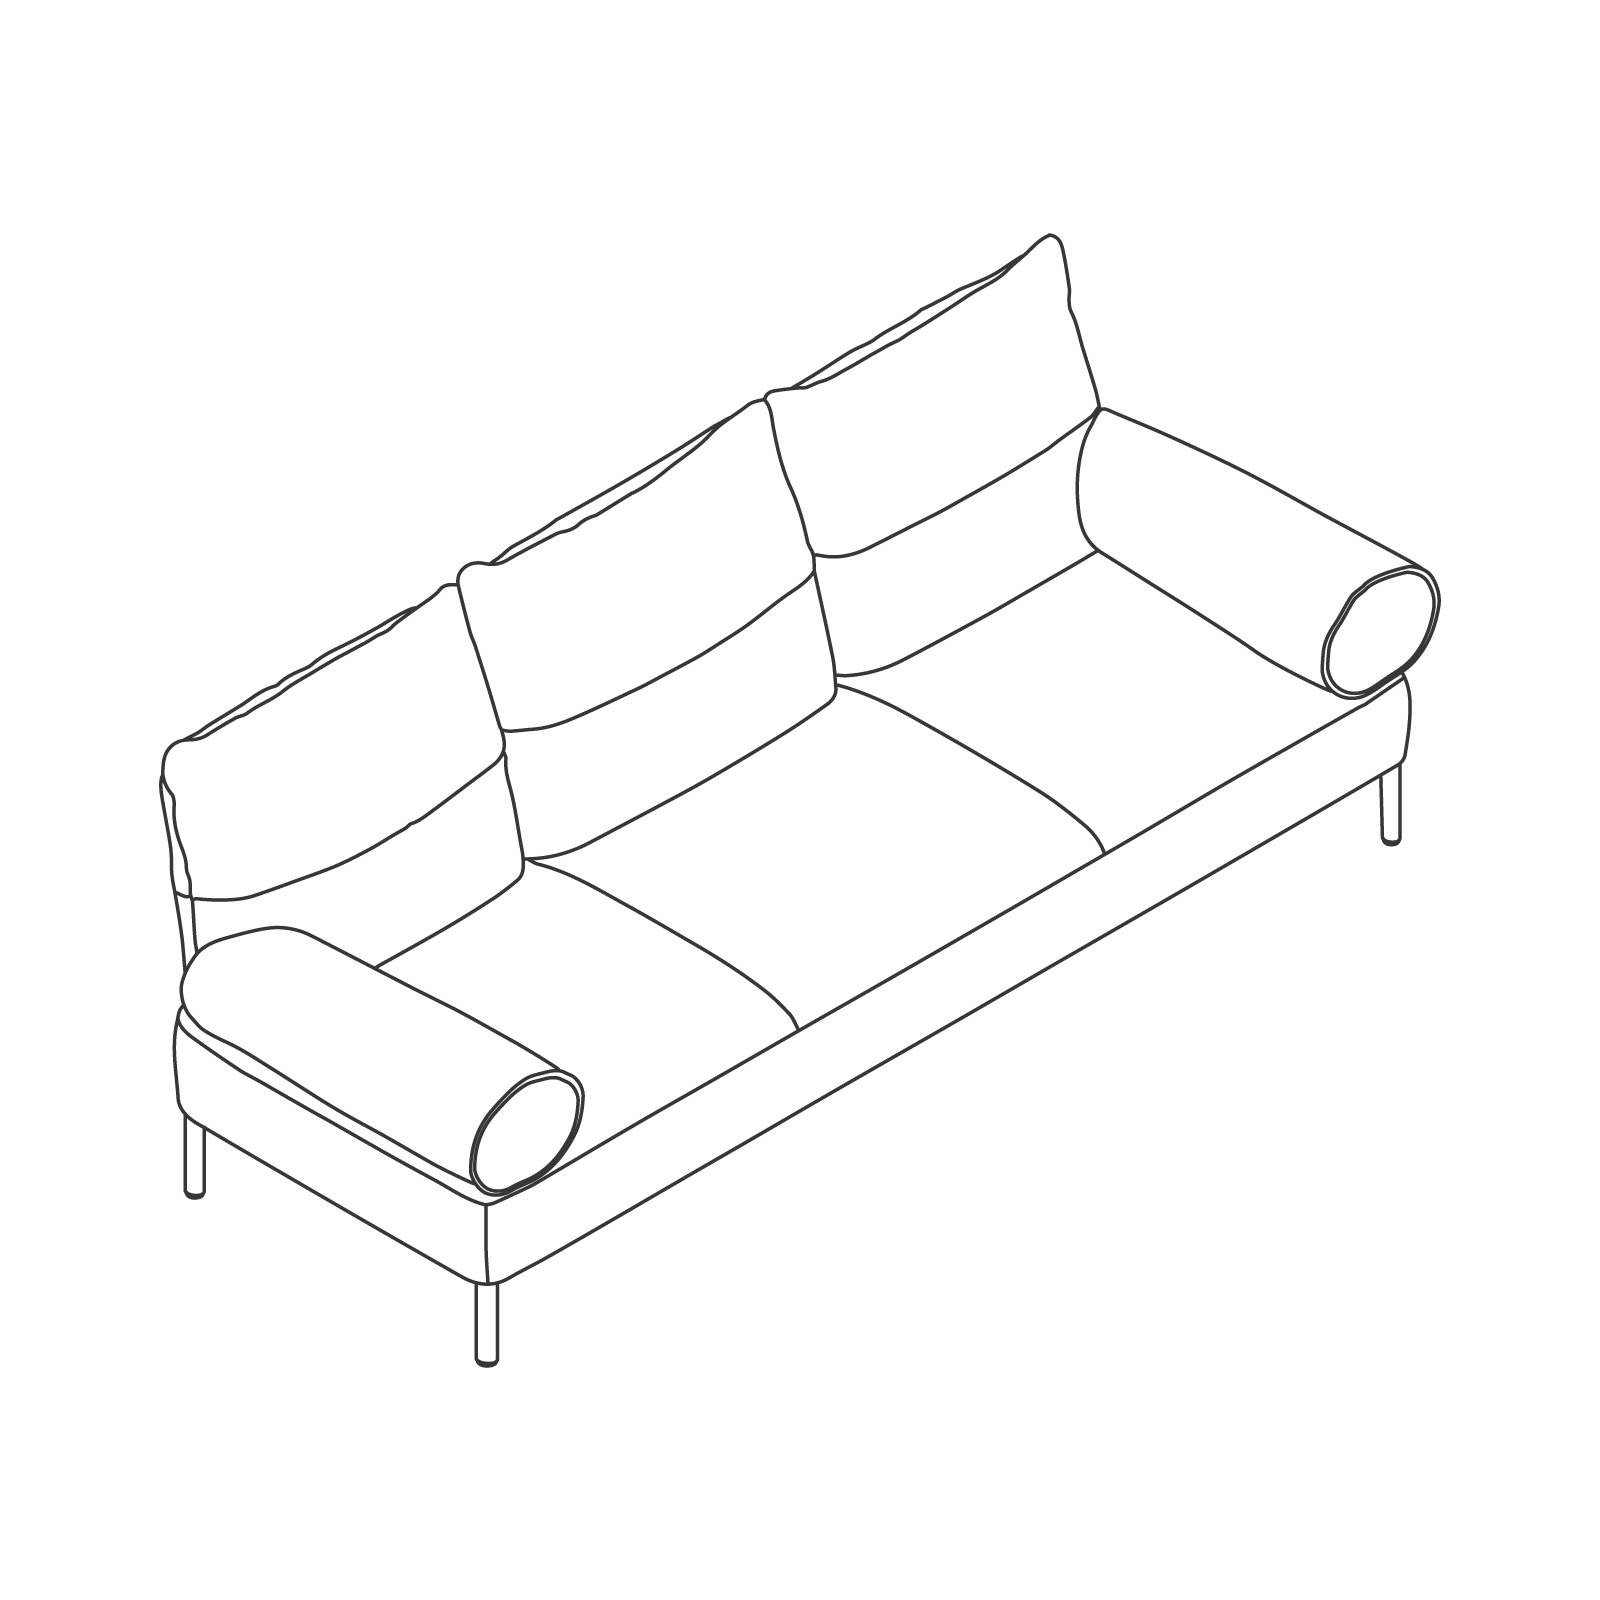 A line drawing - Pandarine Sofa–3 Seat